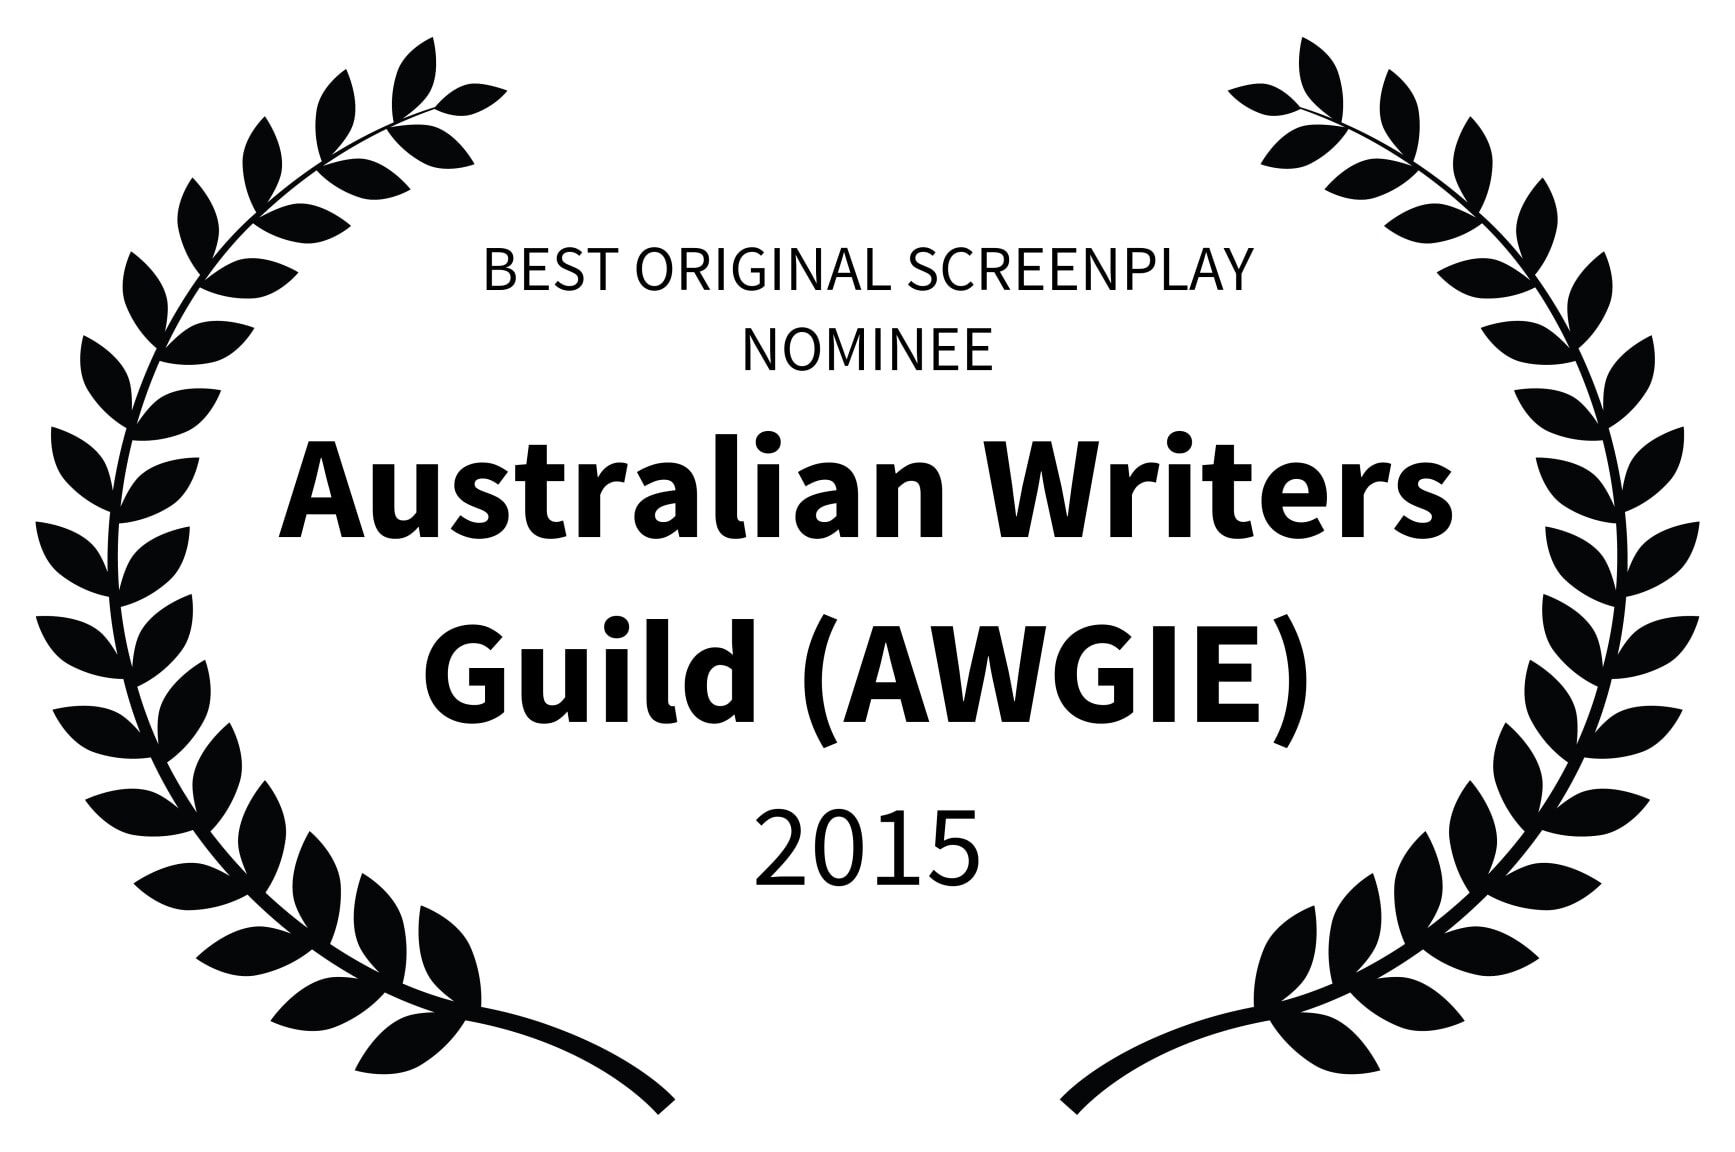 BEST ORIGINAL SCREENPLAY NOMINEE - Australian Writers Guild AWGIE - 2015